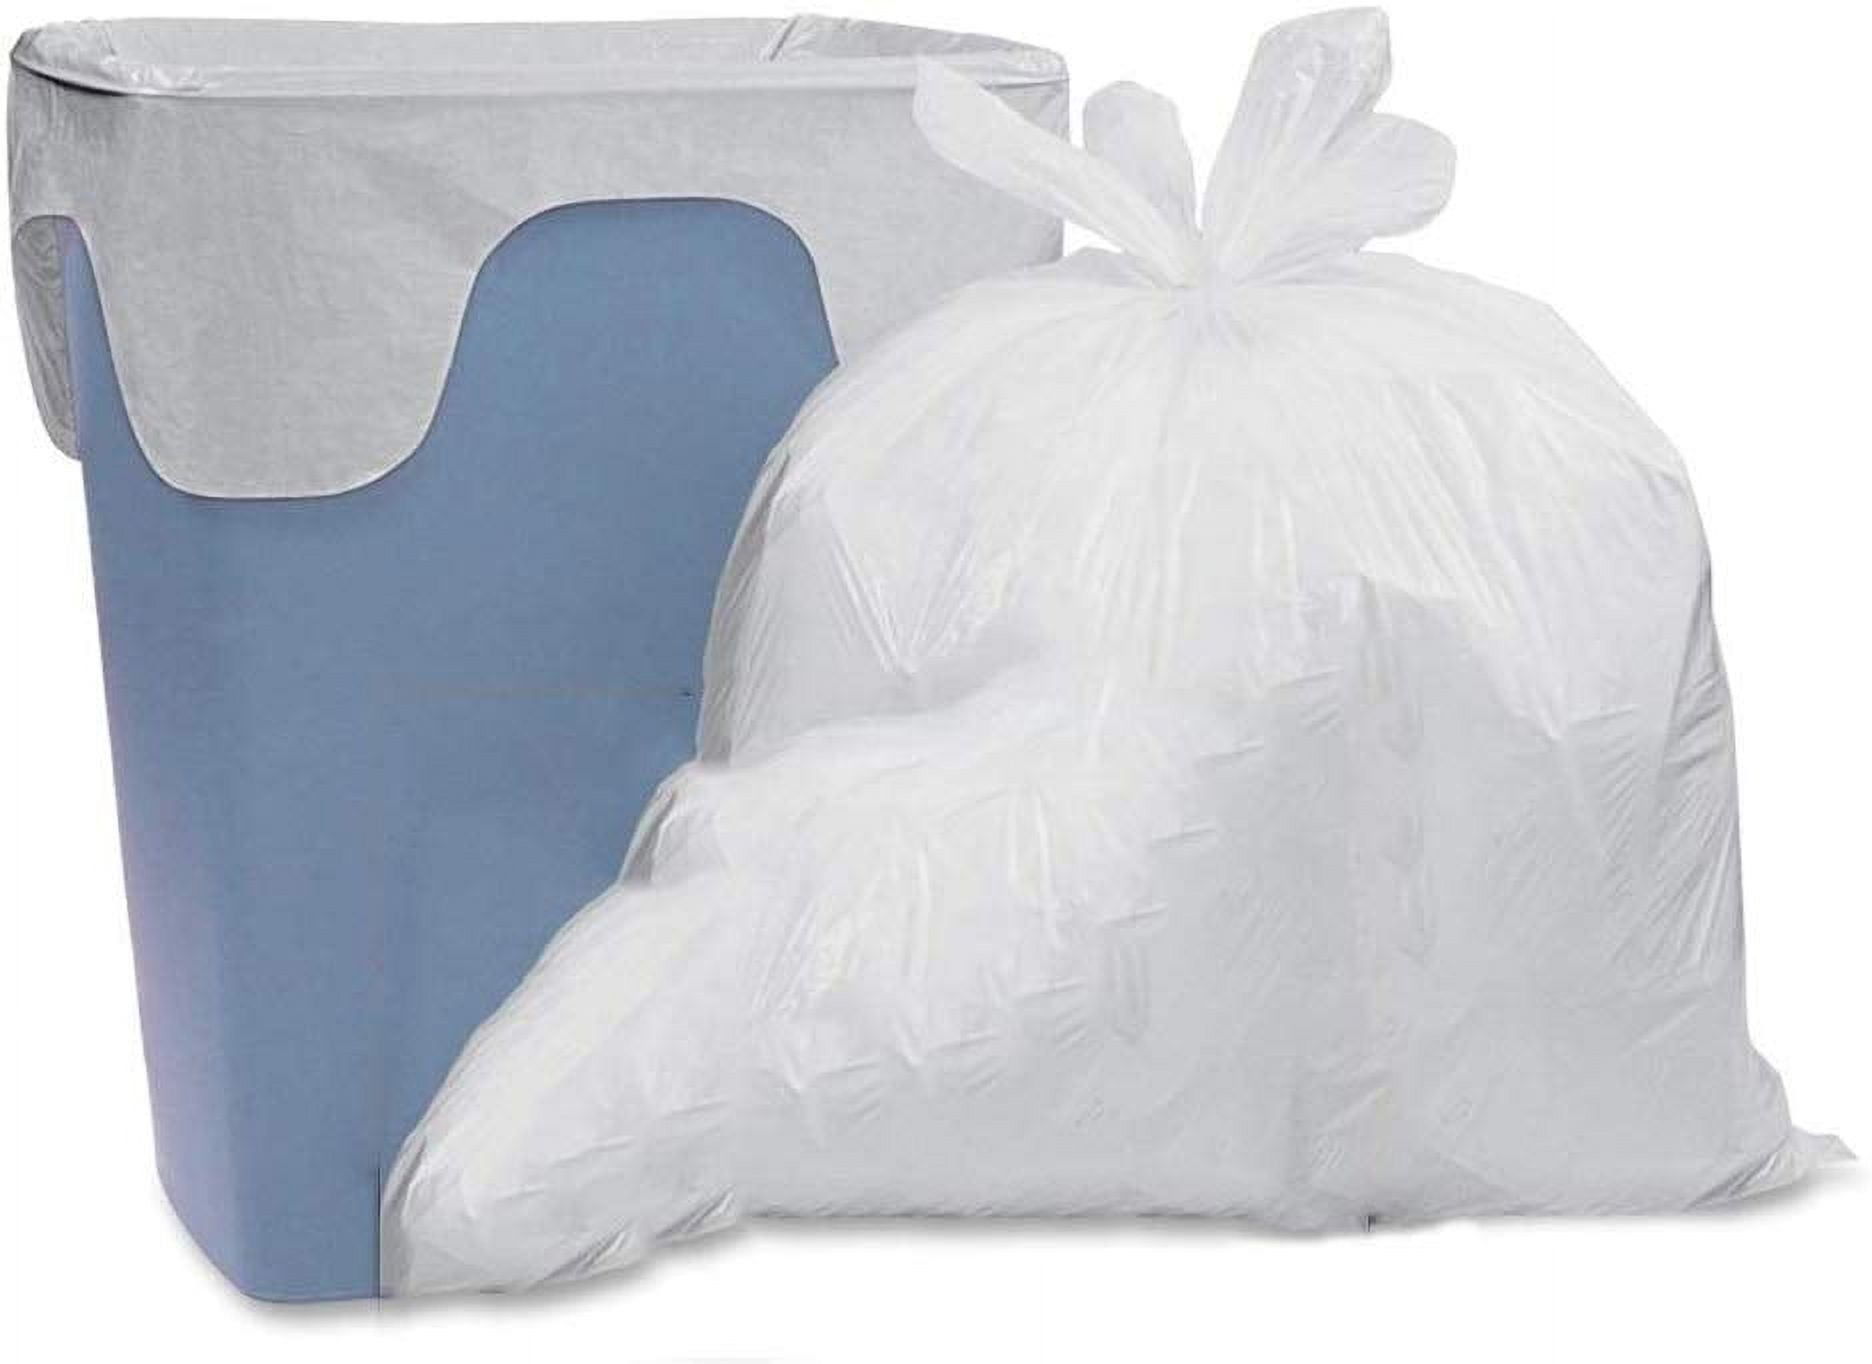 Hefty Twist Tie Medium Trash Bag with Flap Tie Closure, 8 Gallon, White - 24 pack